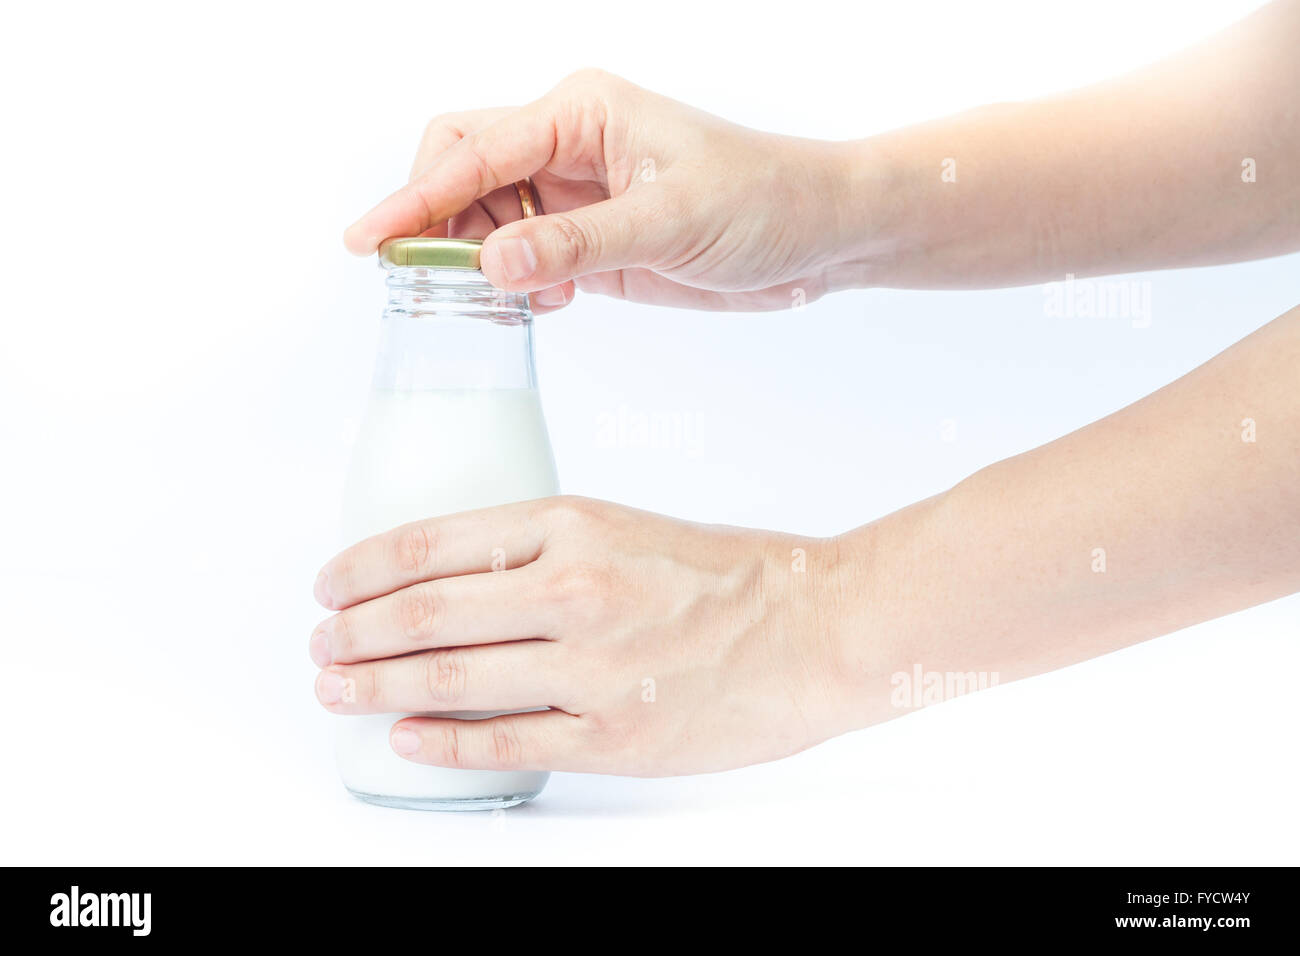 Woman hand open traditional glass milk bottle, stock photo Stock Photo